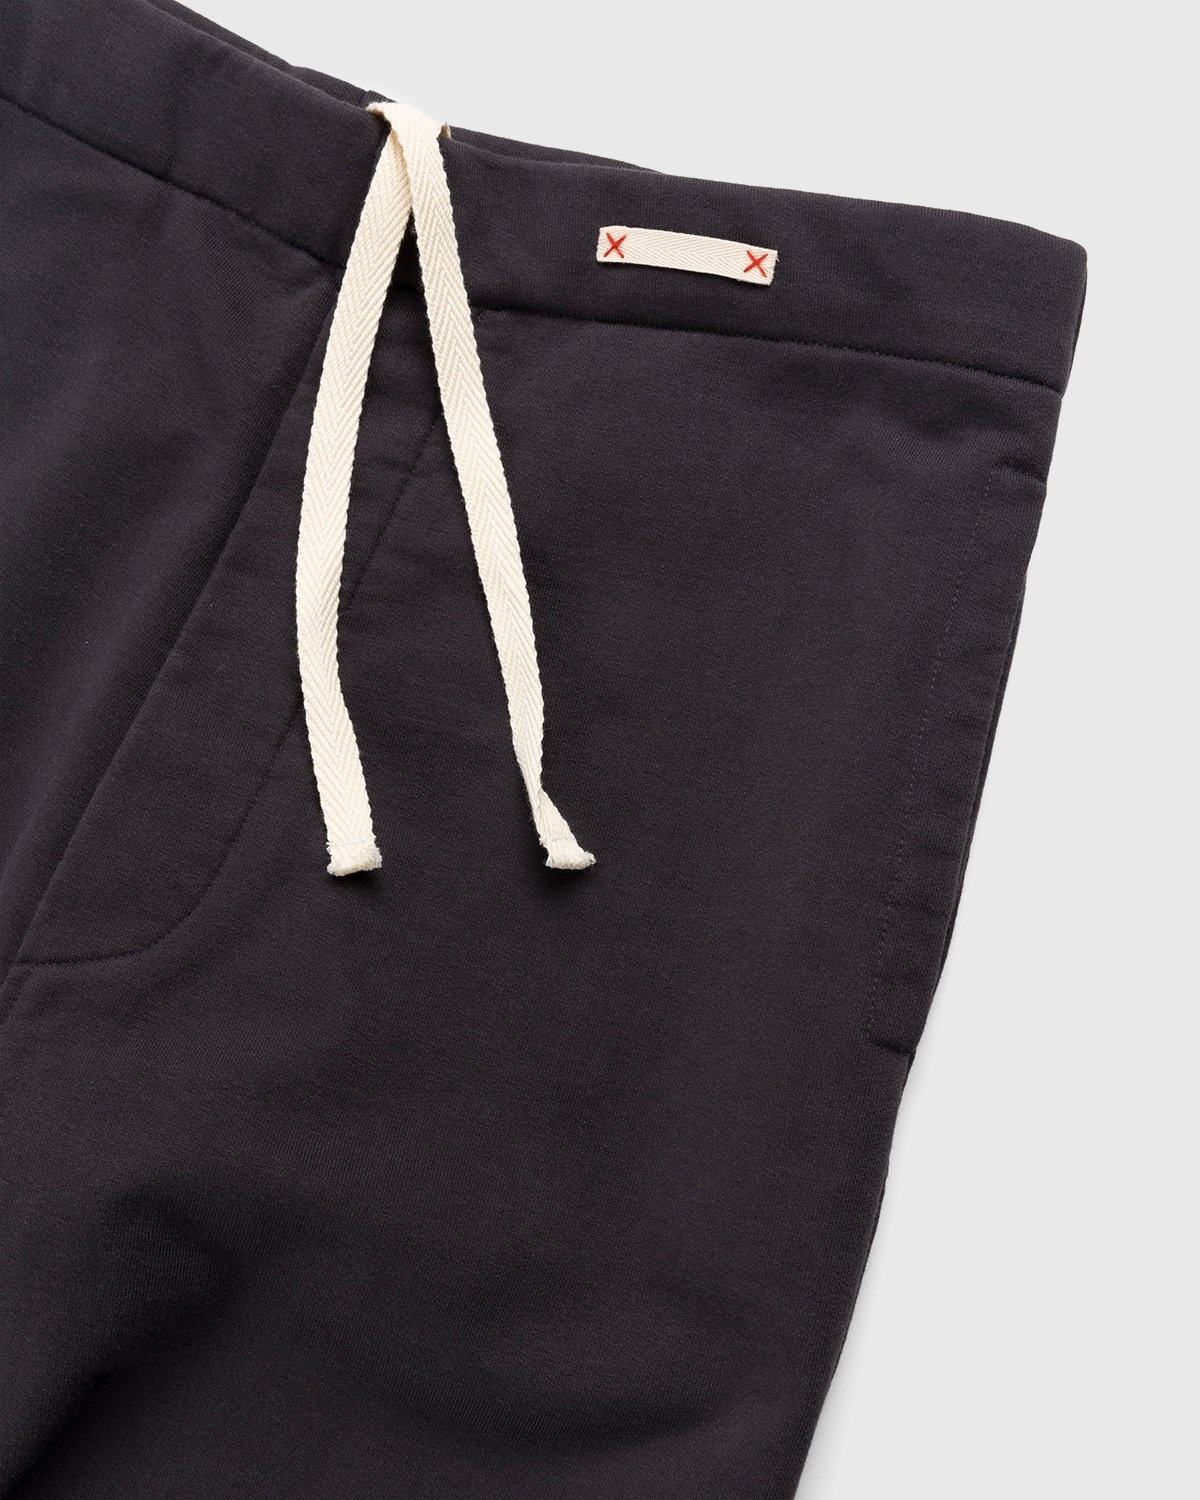 Maison Margiela – Tailored Cotton Trousers Washed Black - Pants - Black - Image 6